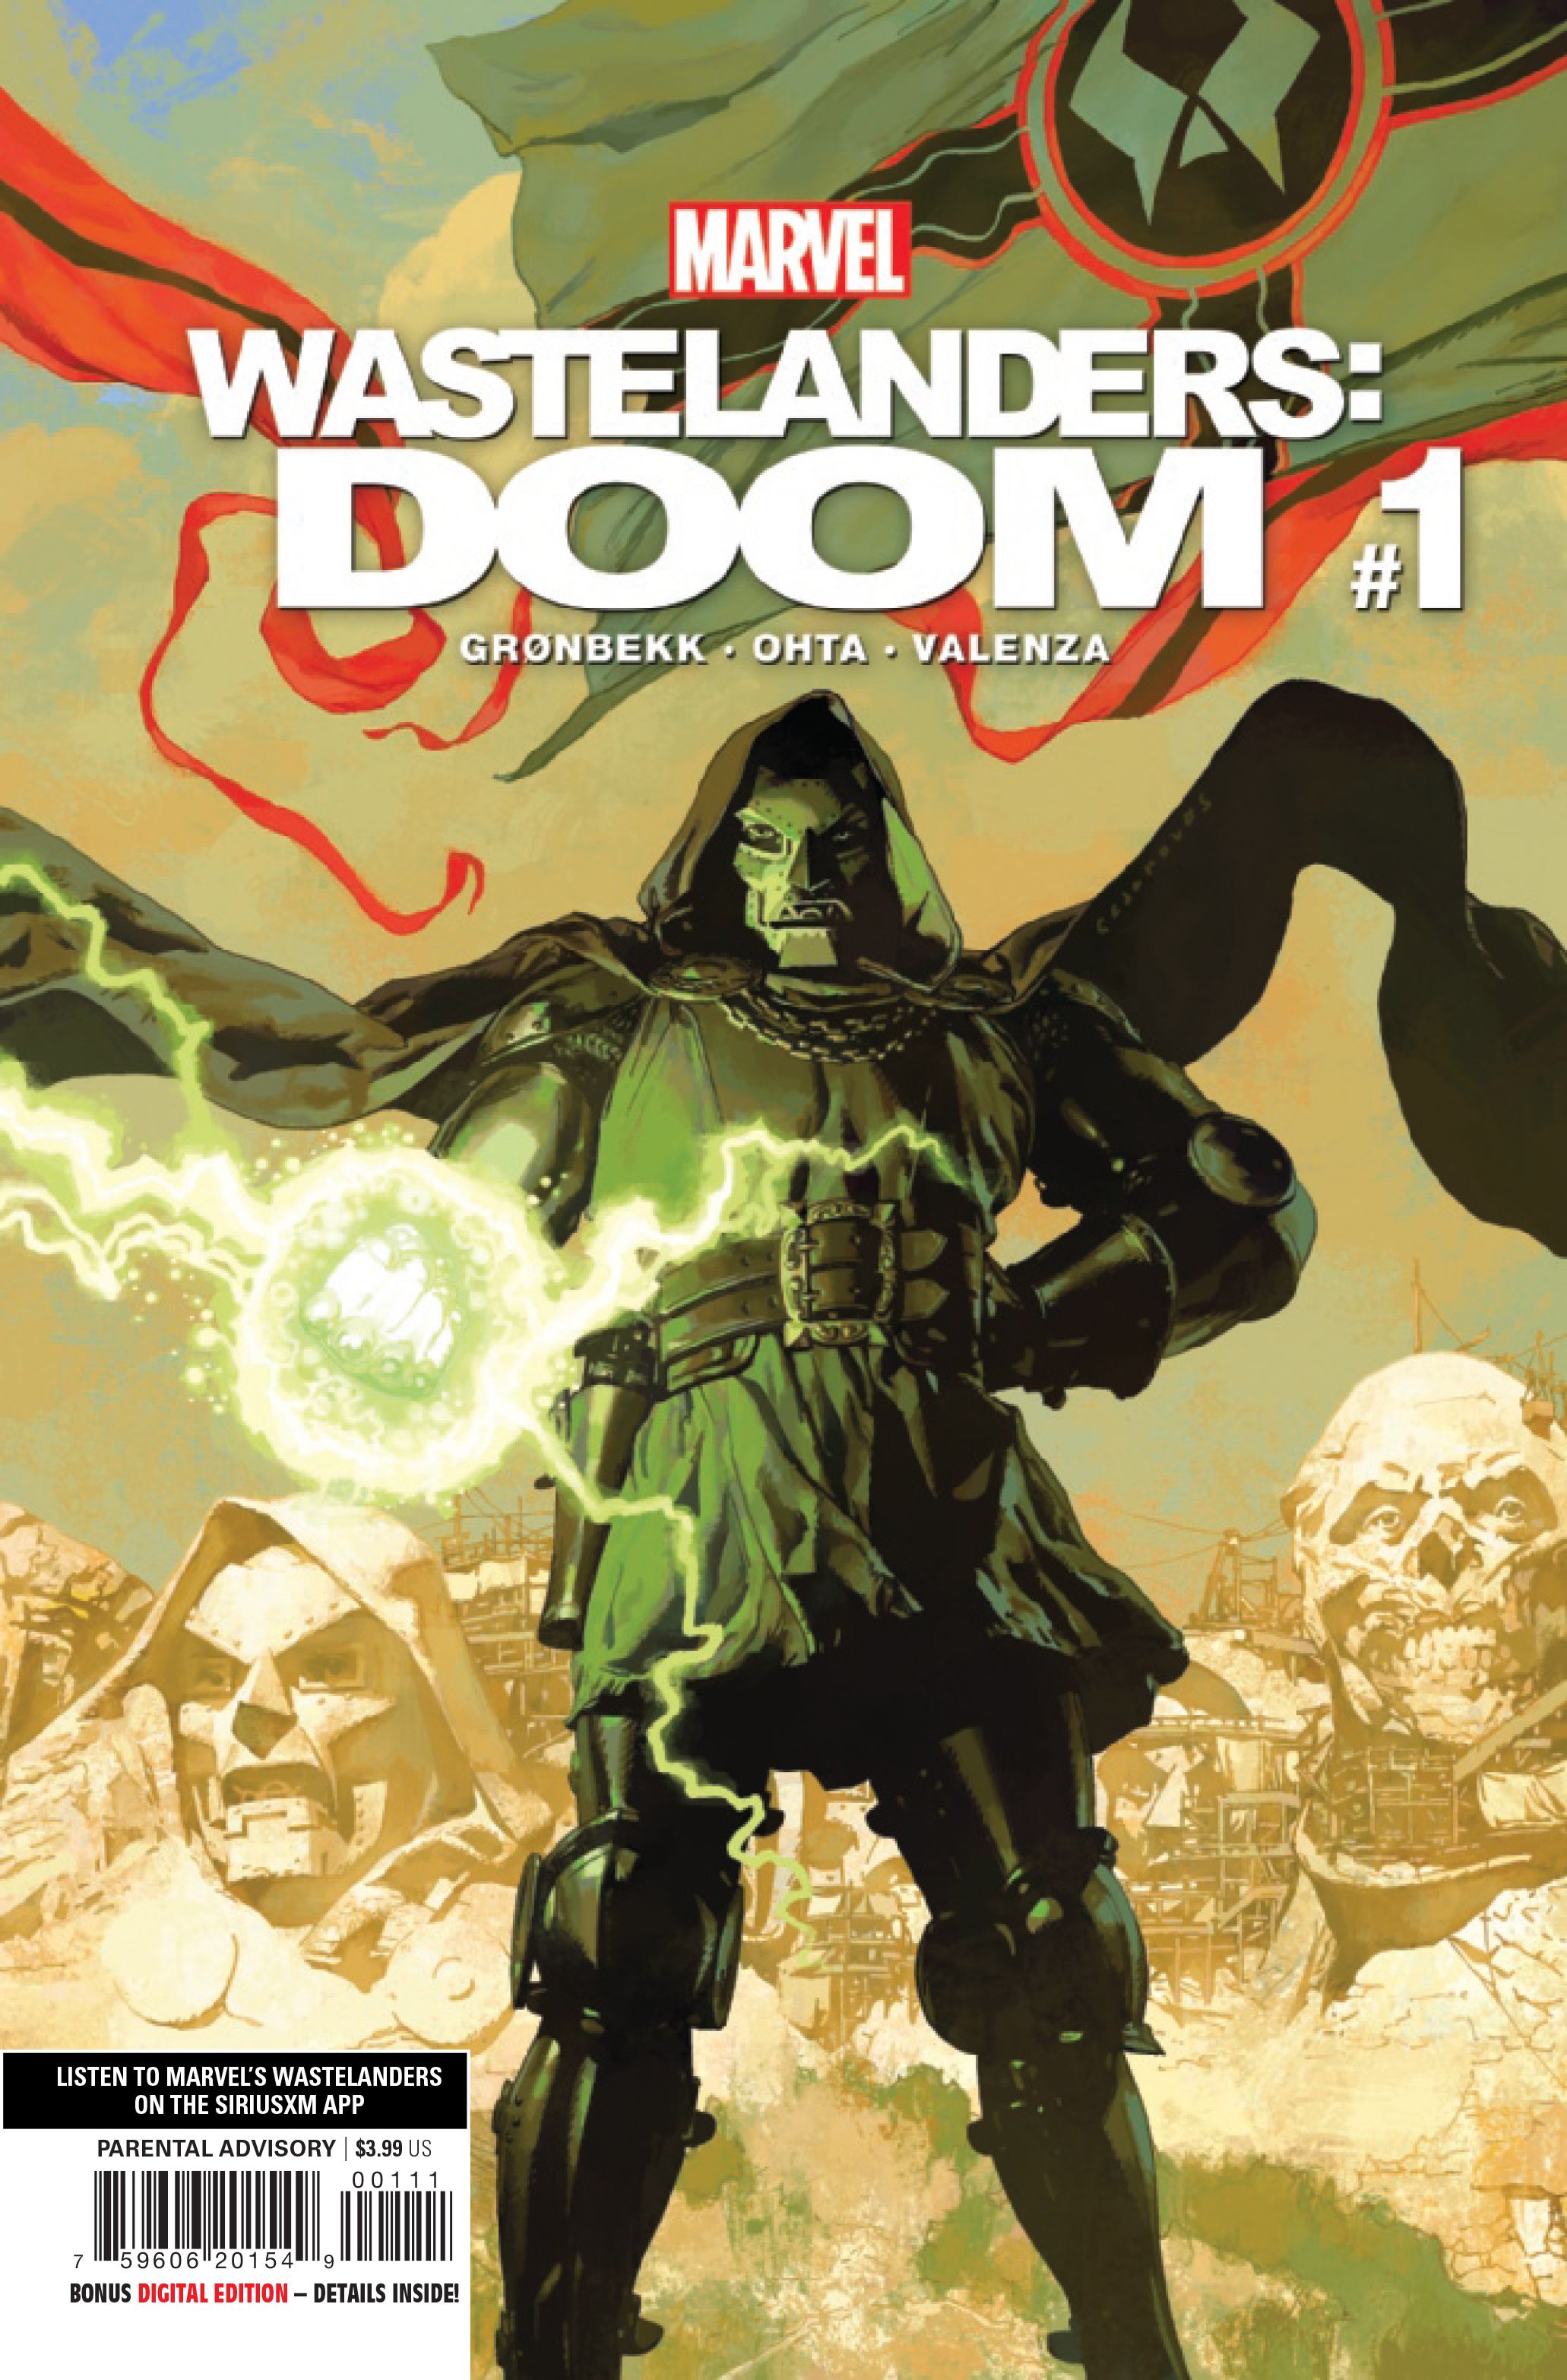 Cover for Wastelanders: Doctor Doom #1